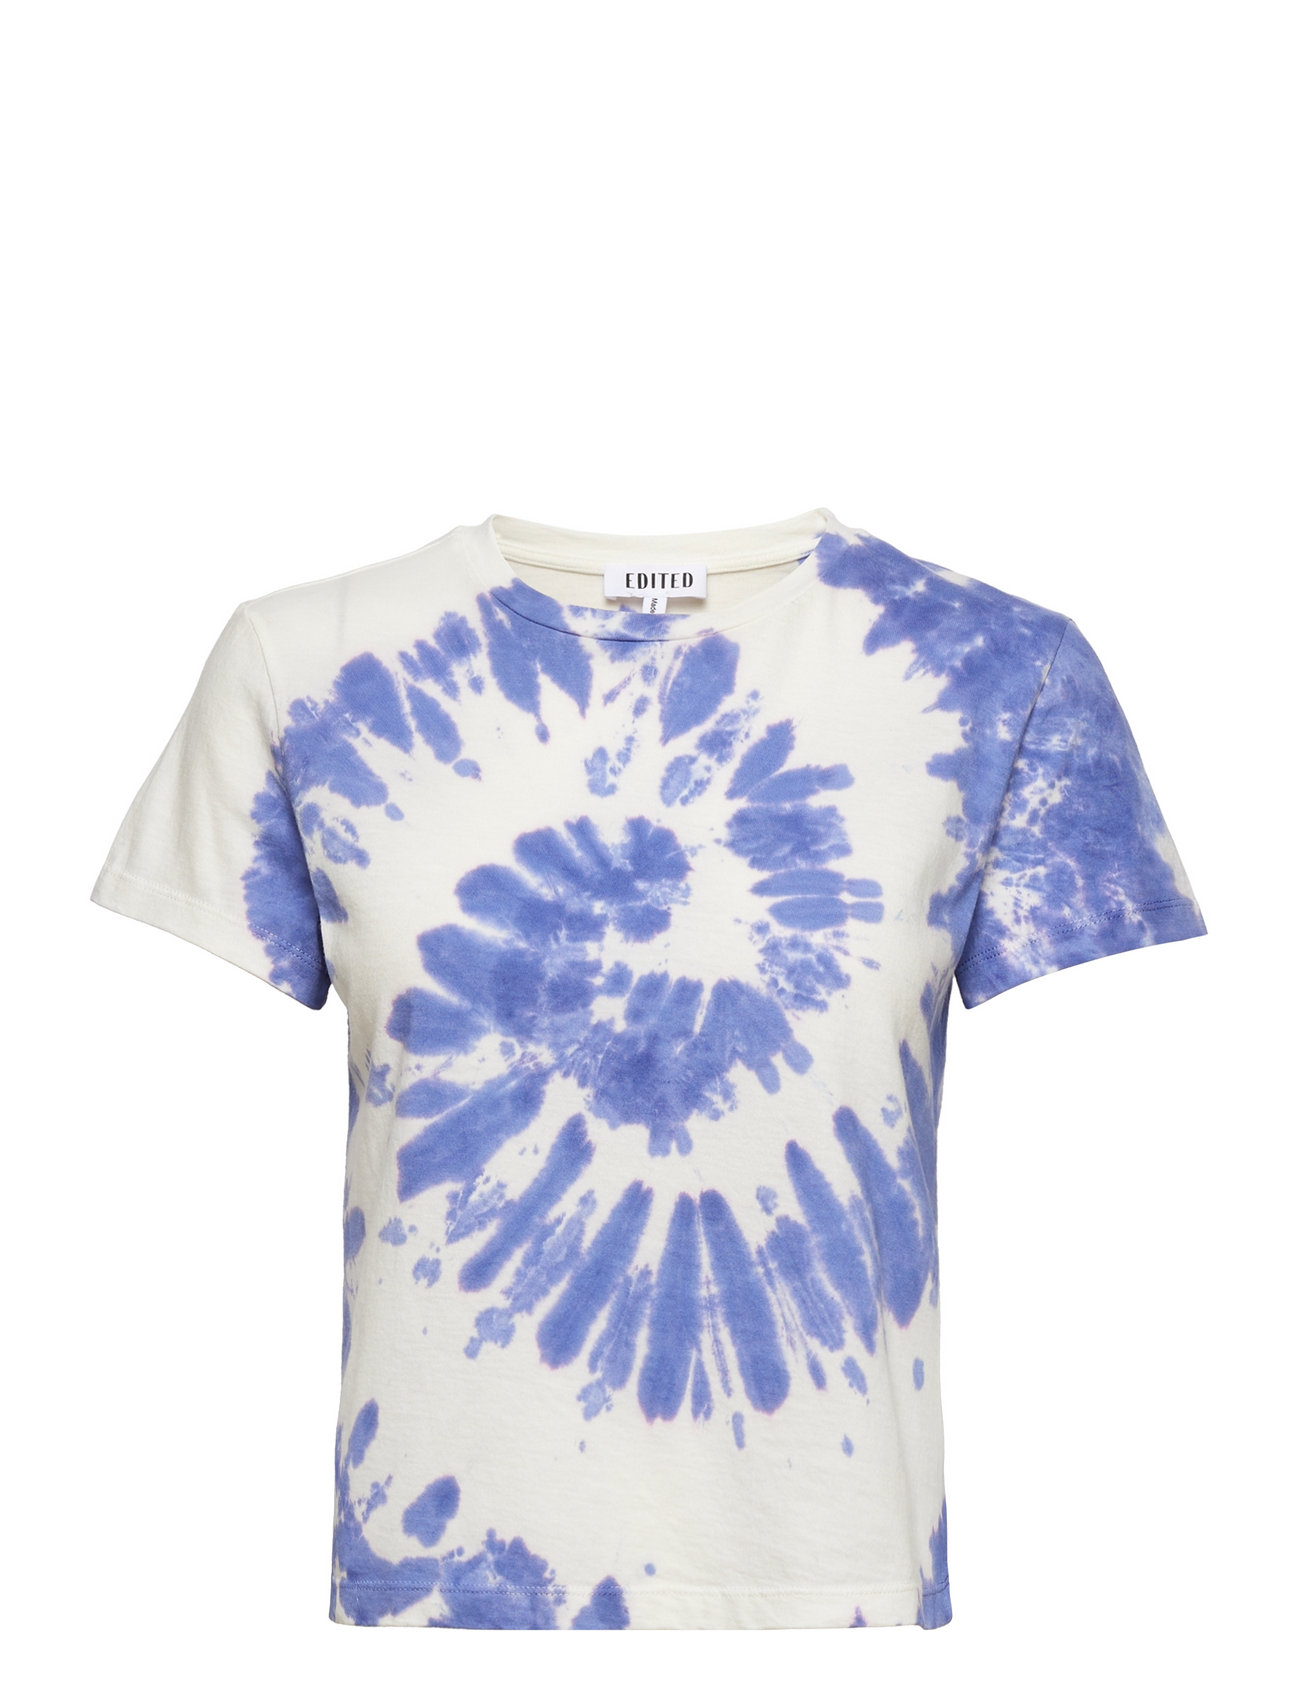 Ester Shirt T-shirts & Tops Short-sleeved Marinblå EDITED